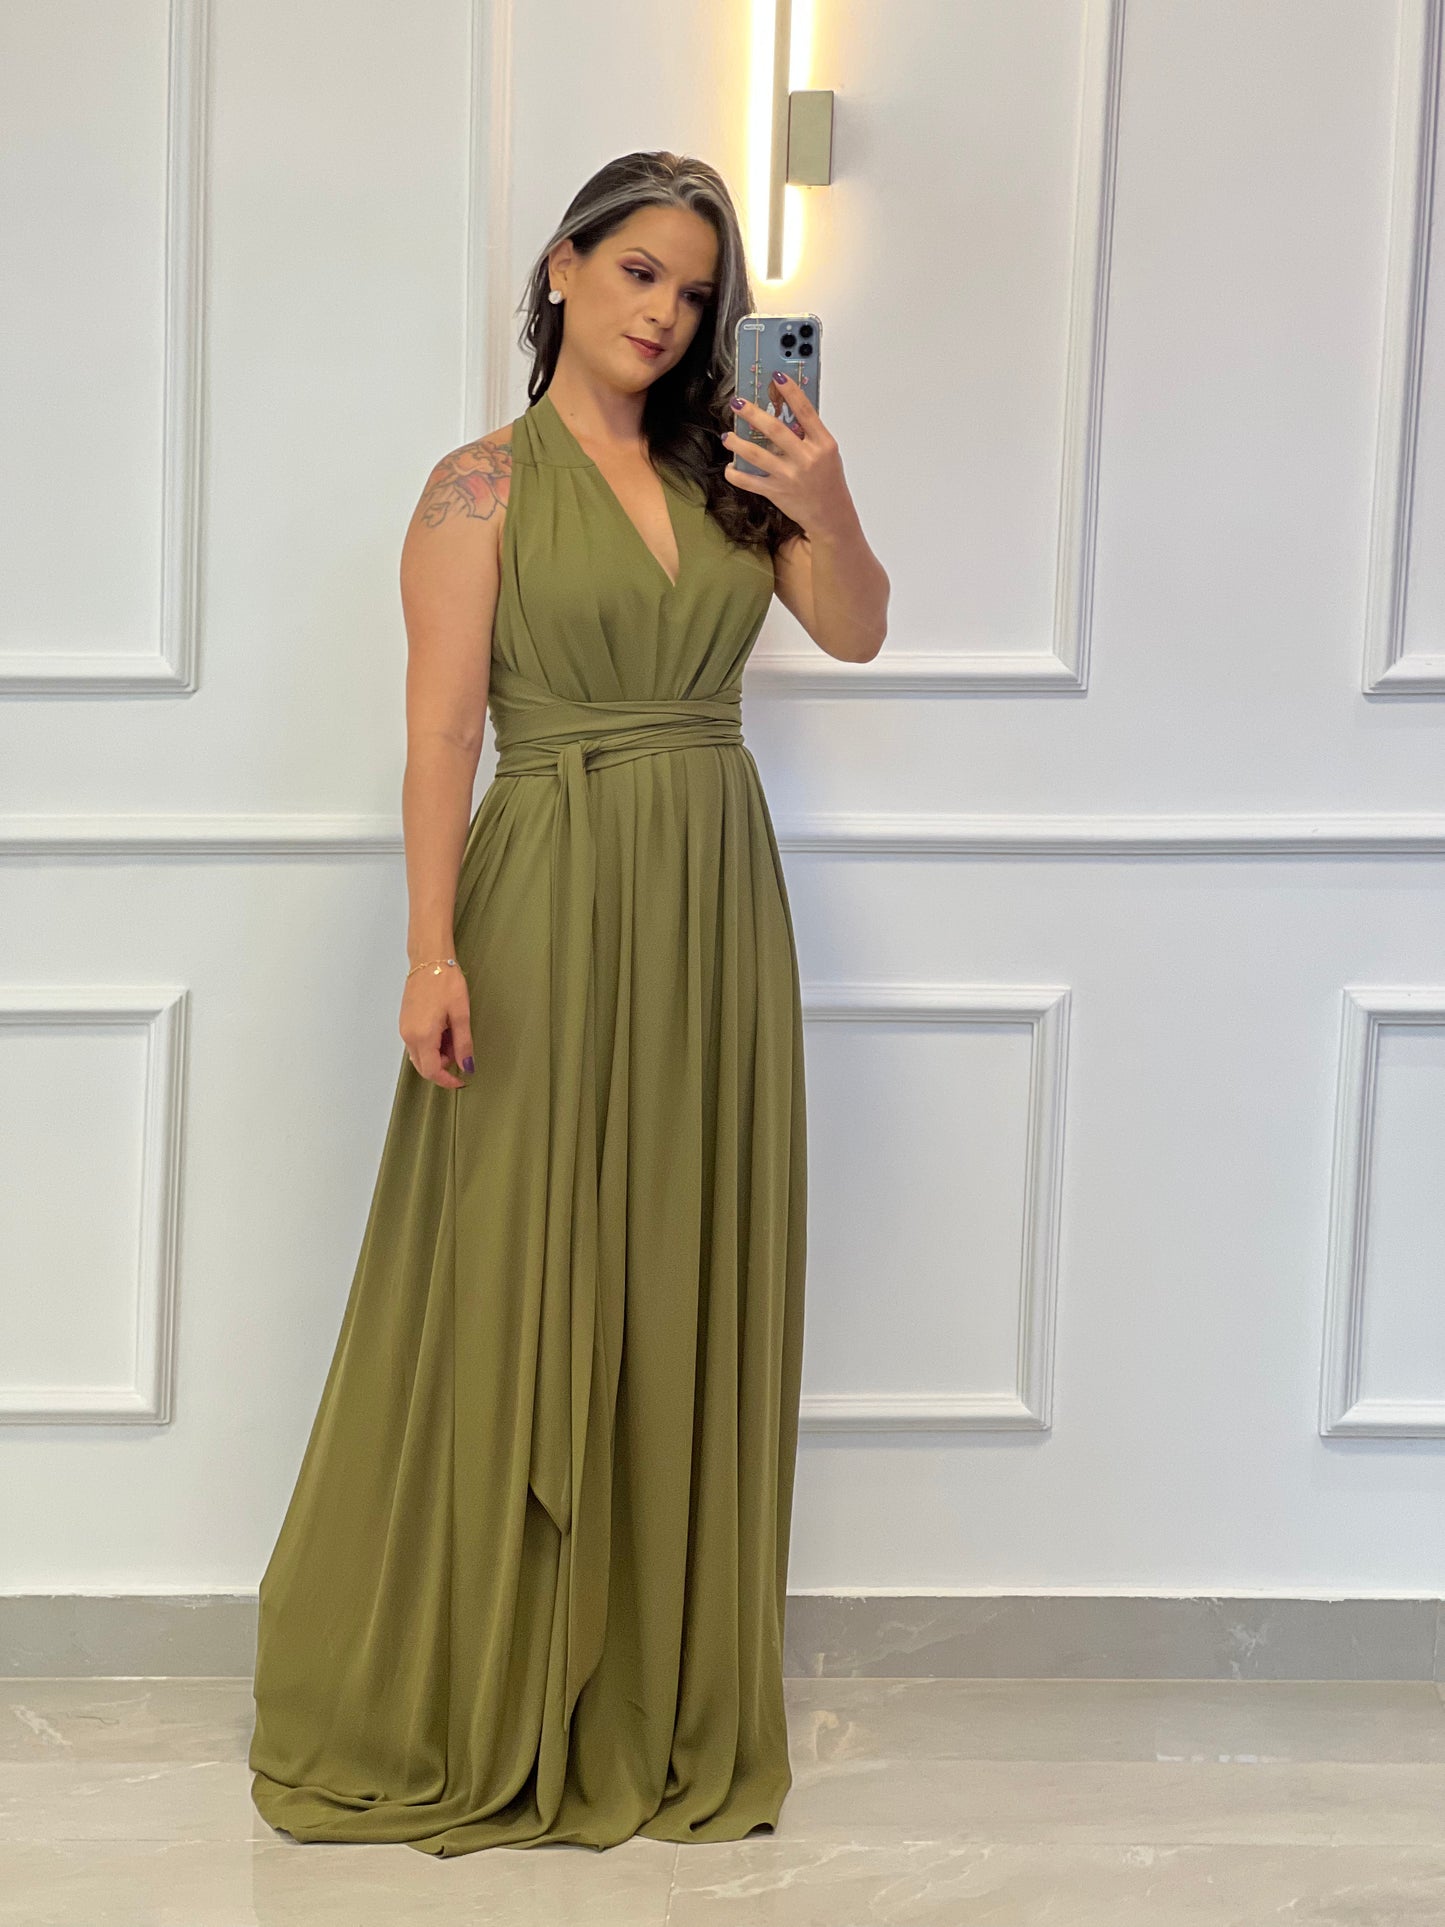 One Size Sleeveless Long Dress - Olive Green